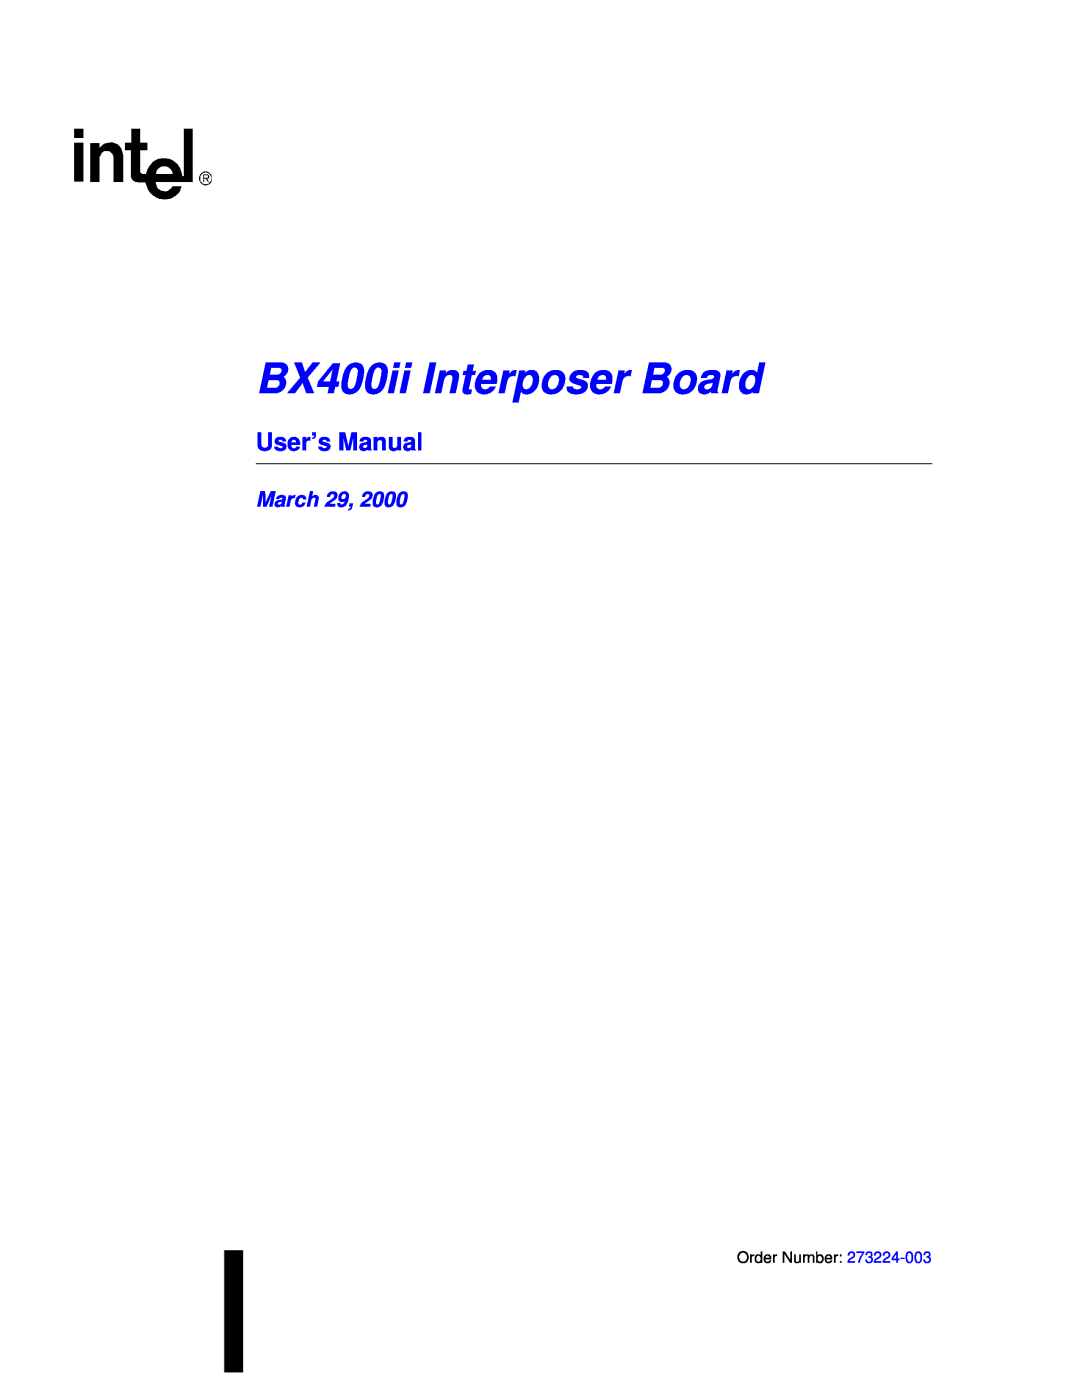 Intel BX400II user manual BX400ii Interposer Board, March, Order Number 